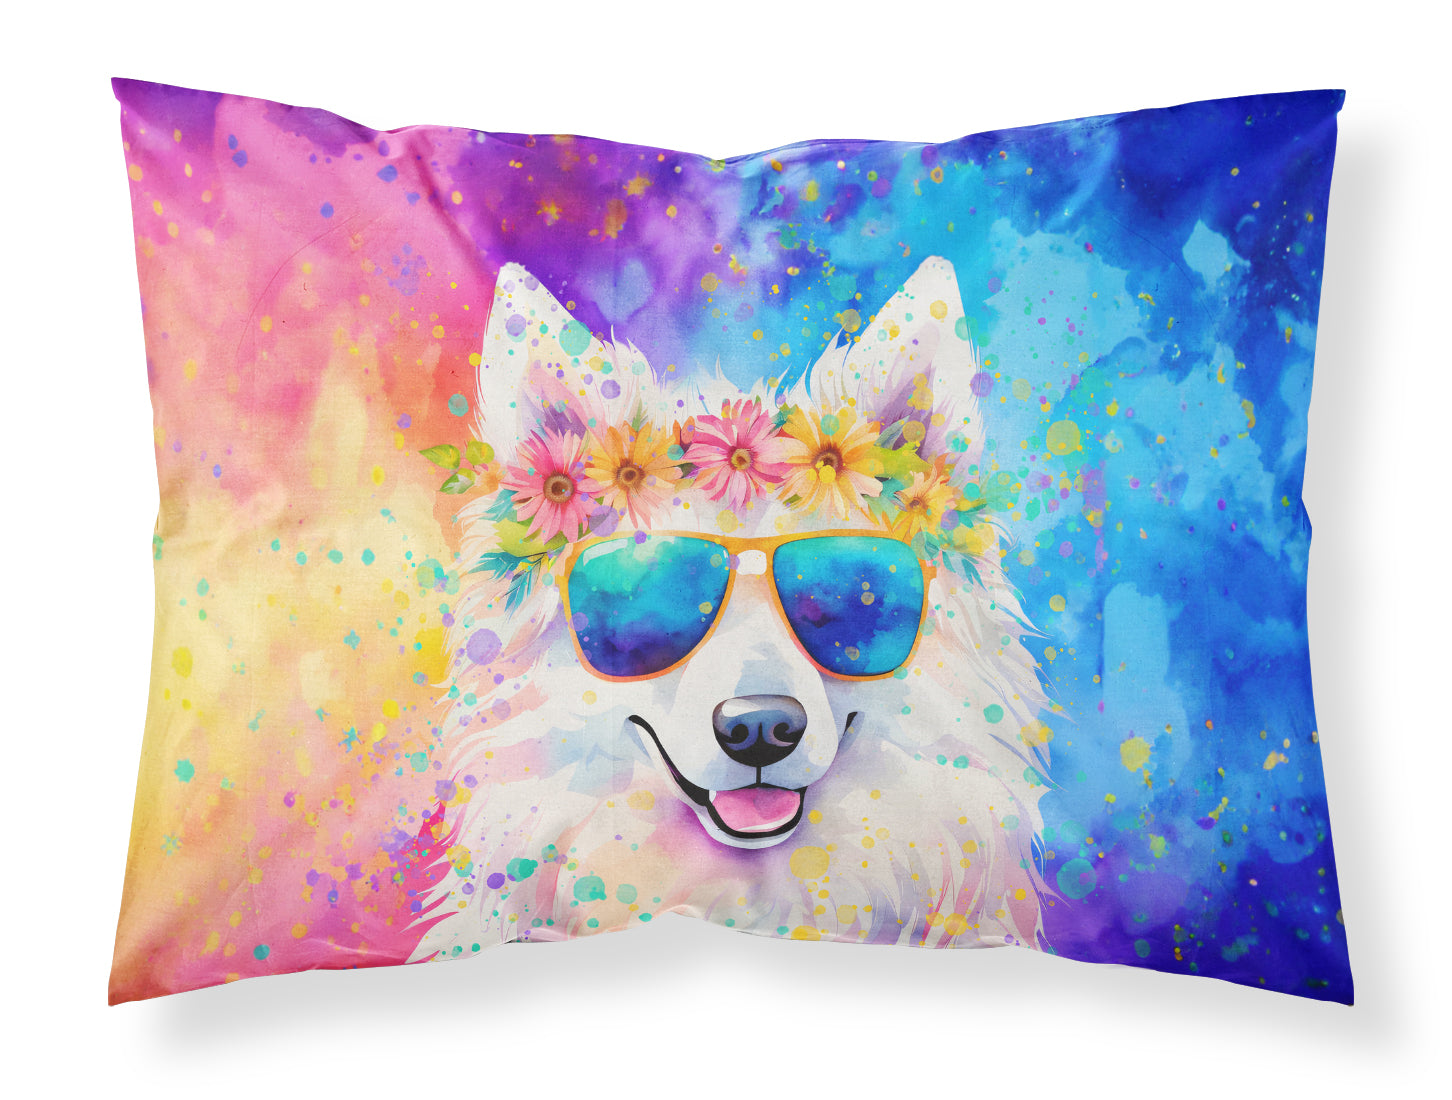 Buy this Samoyed Hippie Dawg Standard Pillowcase